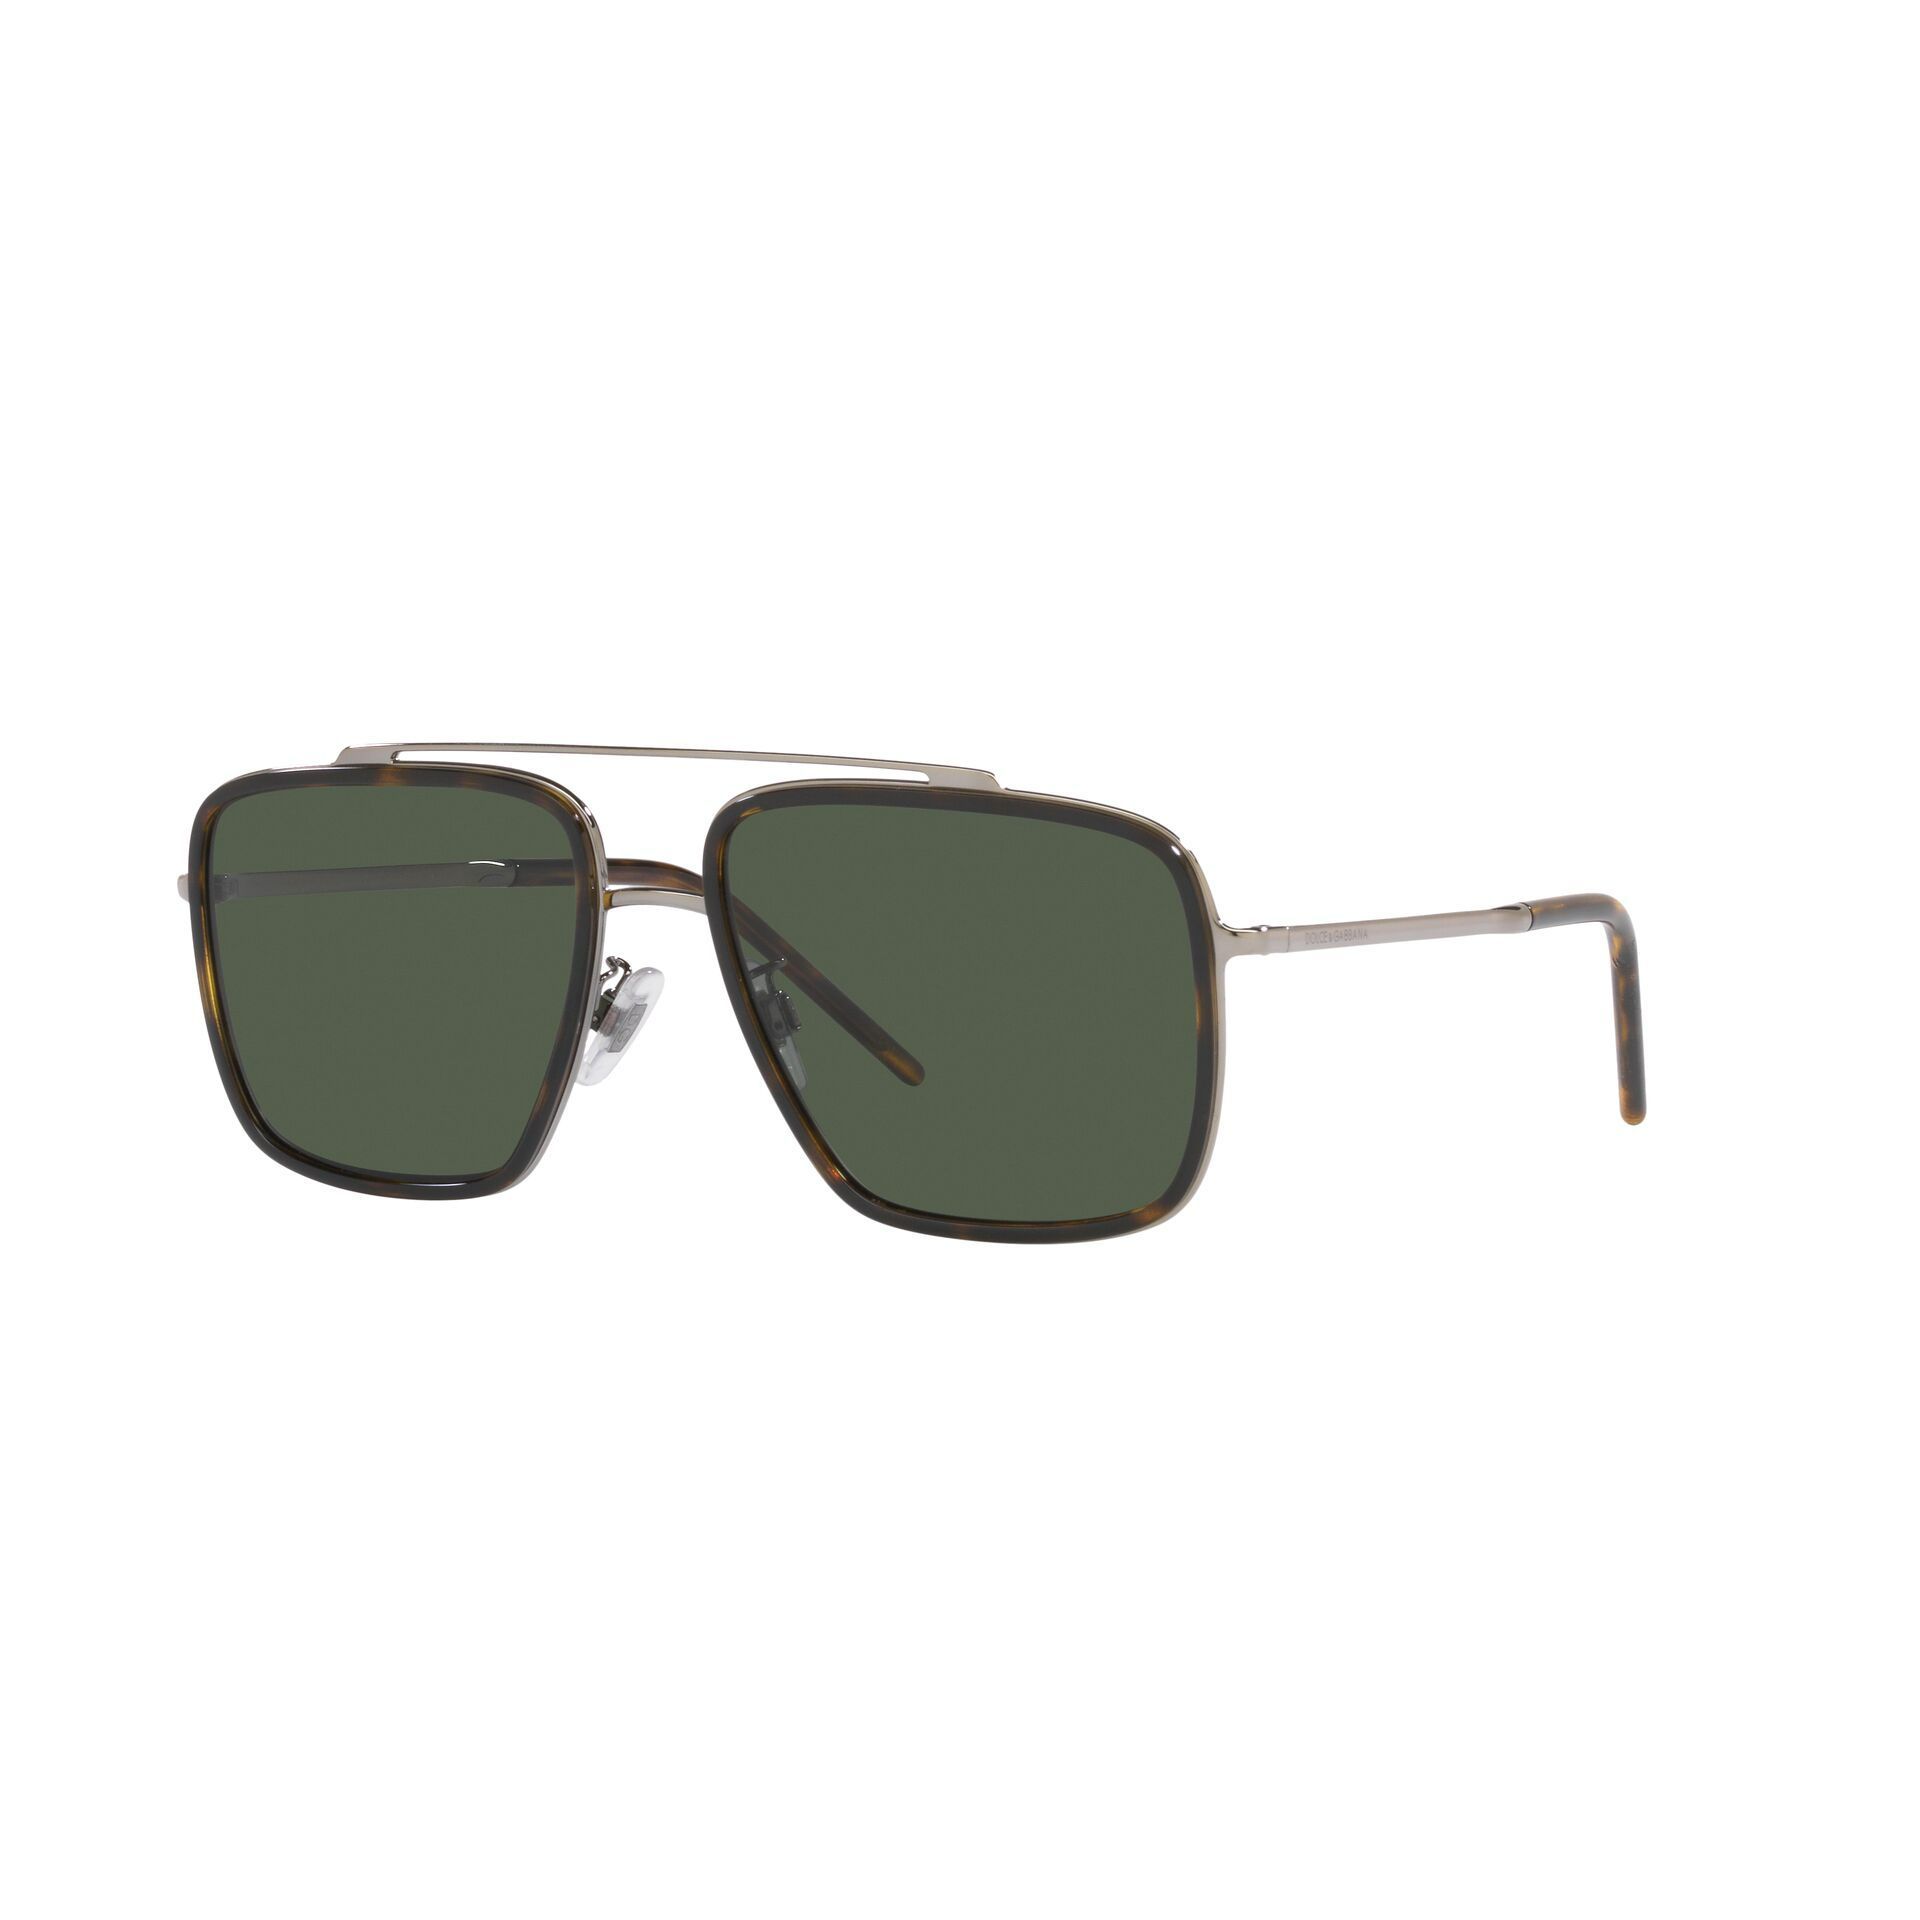 DG2220 Square Sunglasses 13359A - size 57